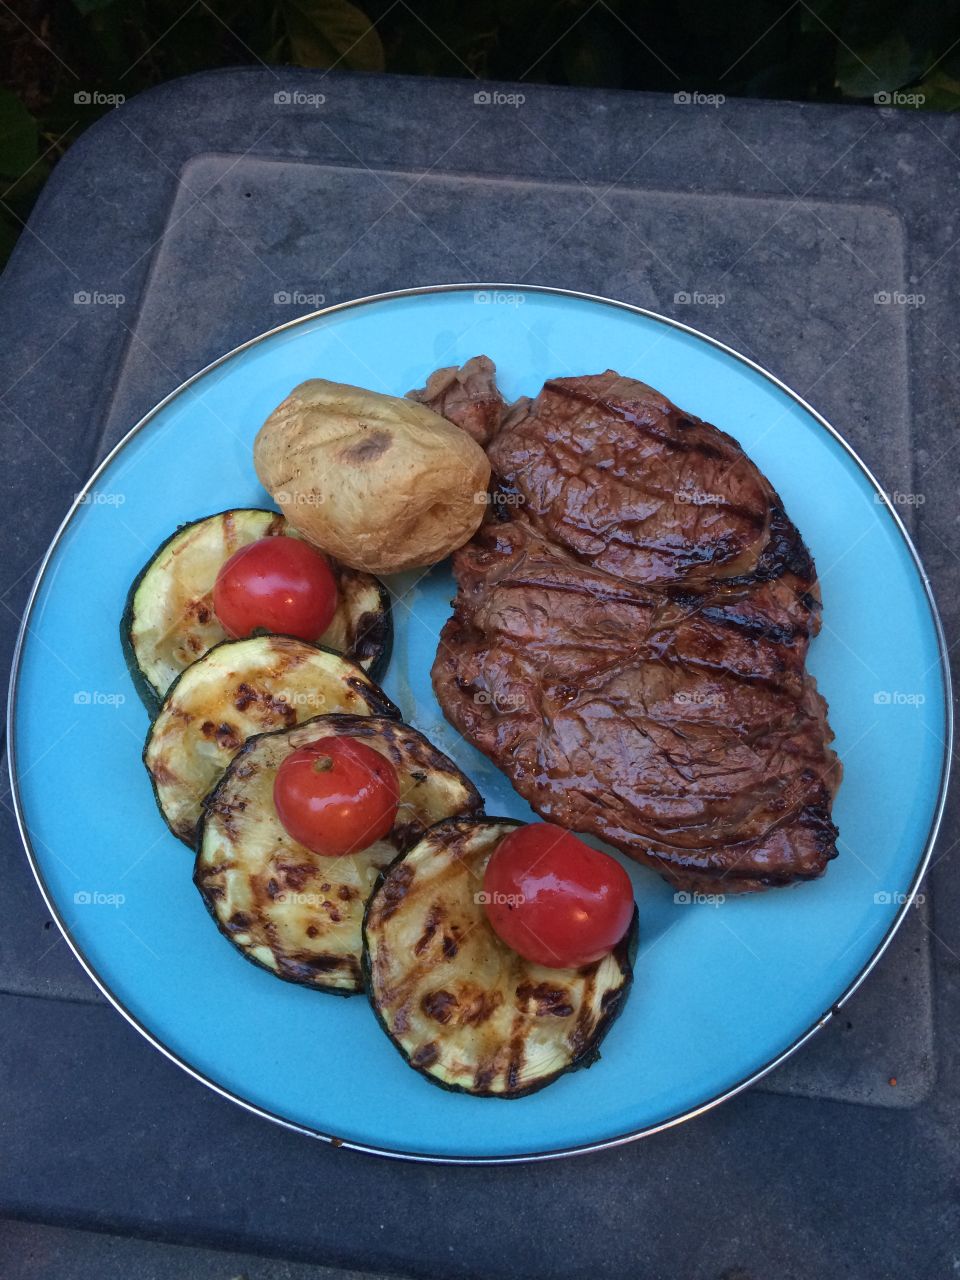 Grilled steak and veggies